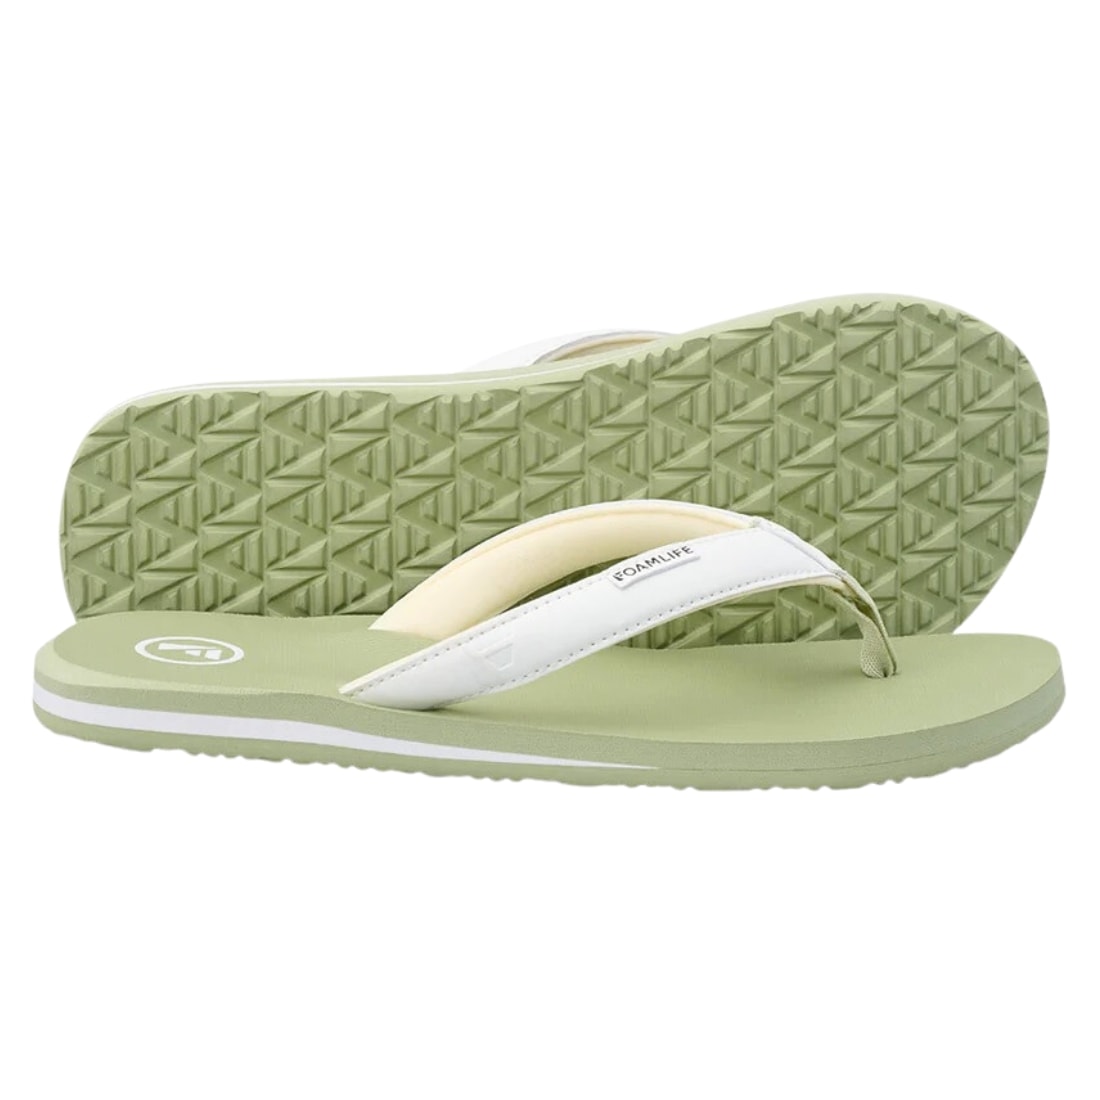 Foamlife Womens Lixi SC Flip Flop Sandals - Sage Green